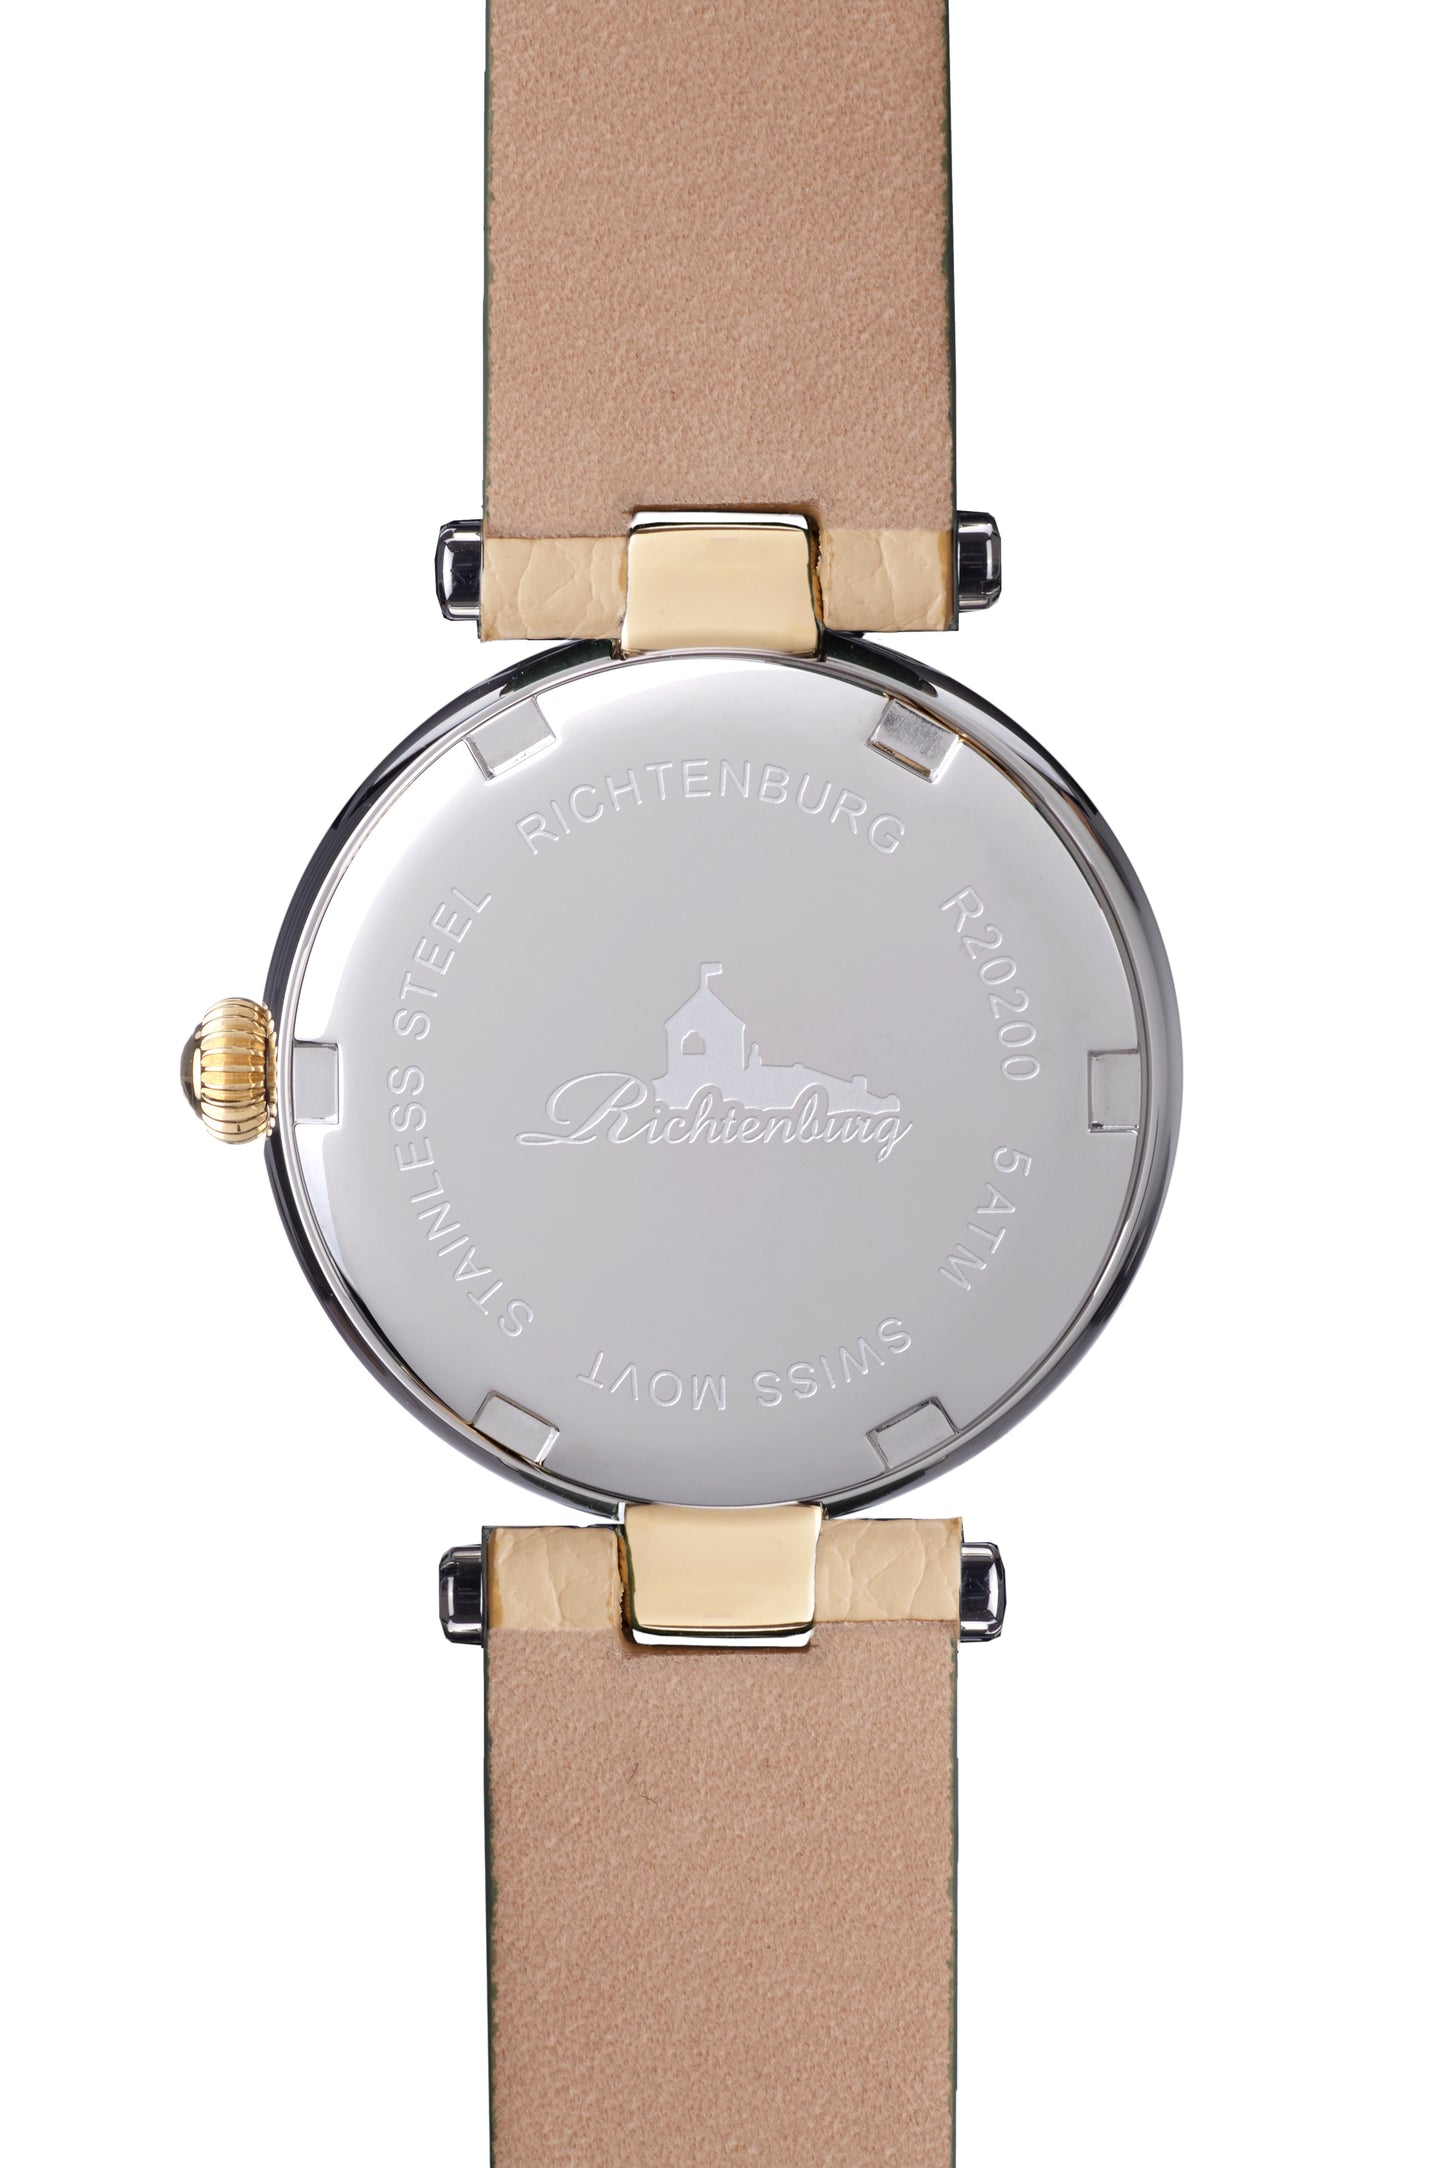 Automatic watches — Vivana — Richtenburg — two-tone gold IP steel silver